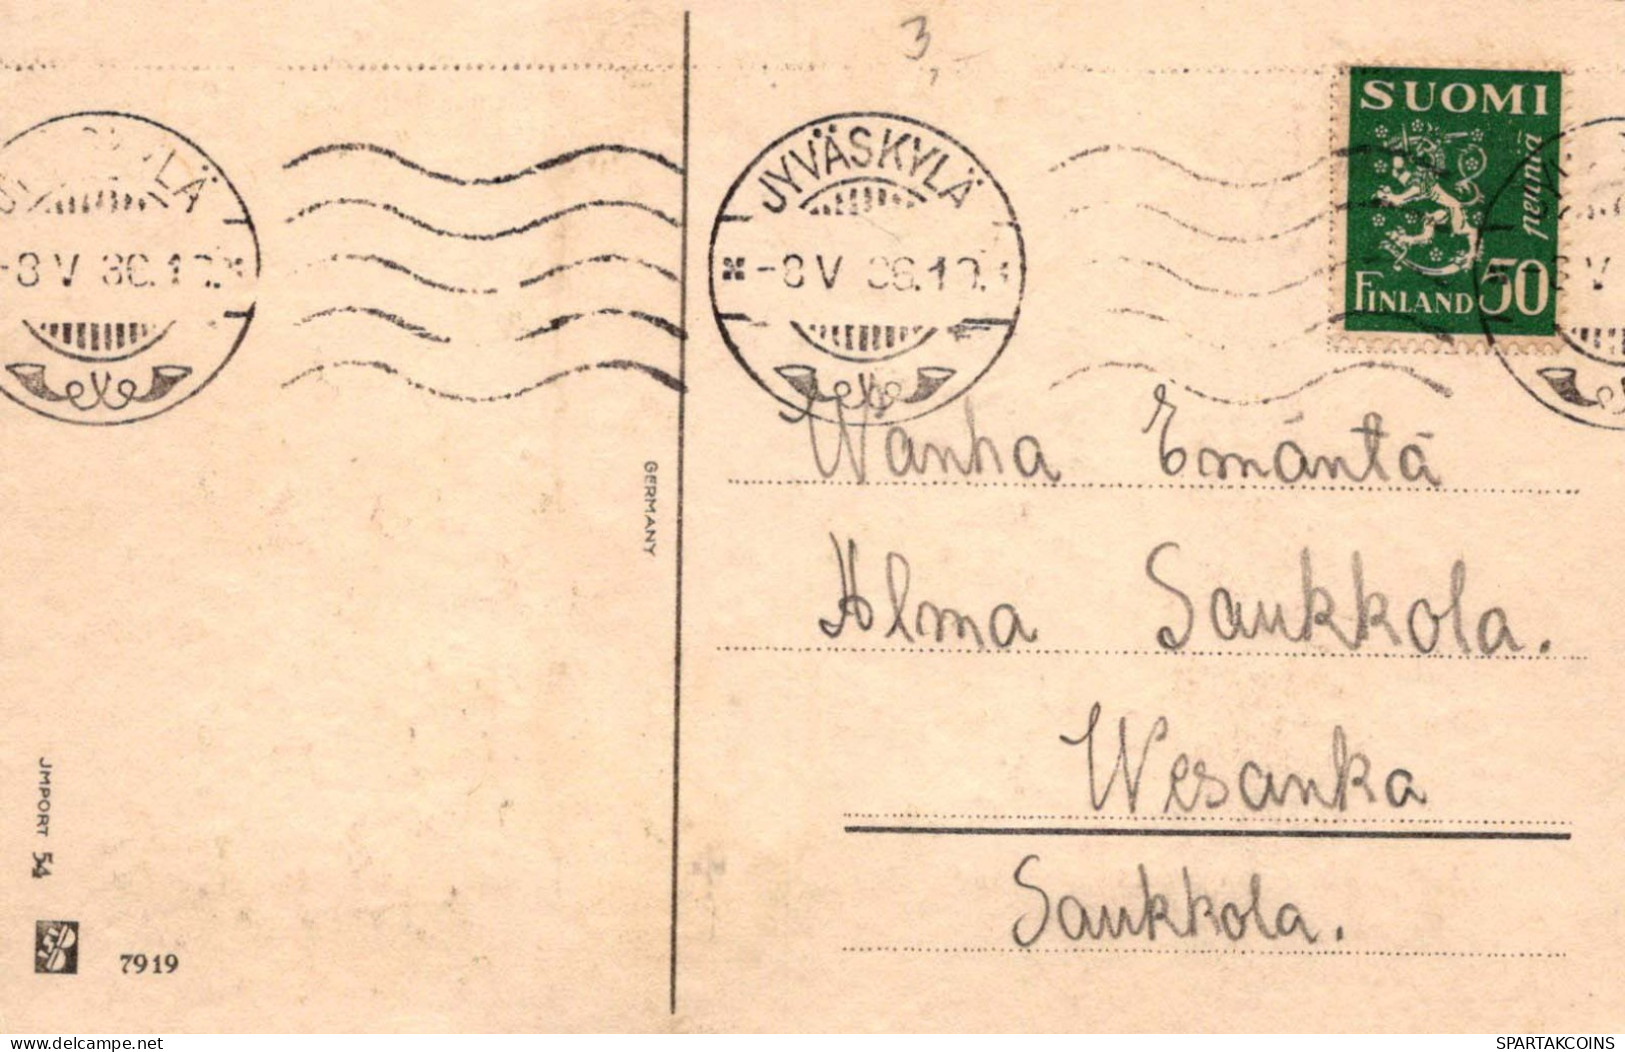 FLORES Vintage Tarjeta Postal CPA #PKE605.ES - Blumen